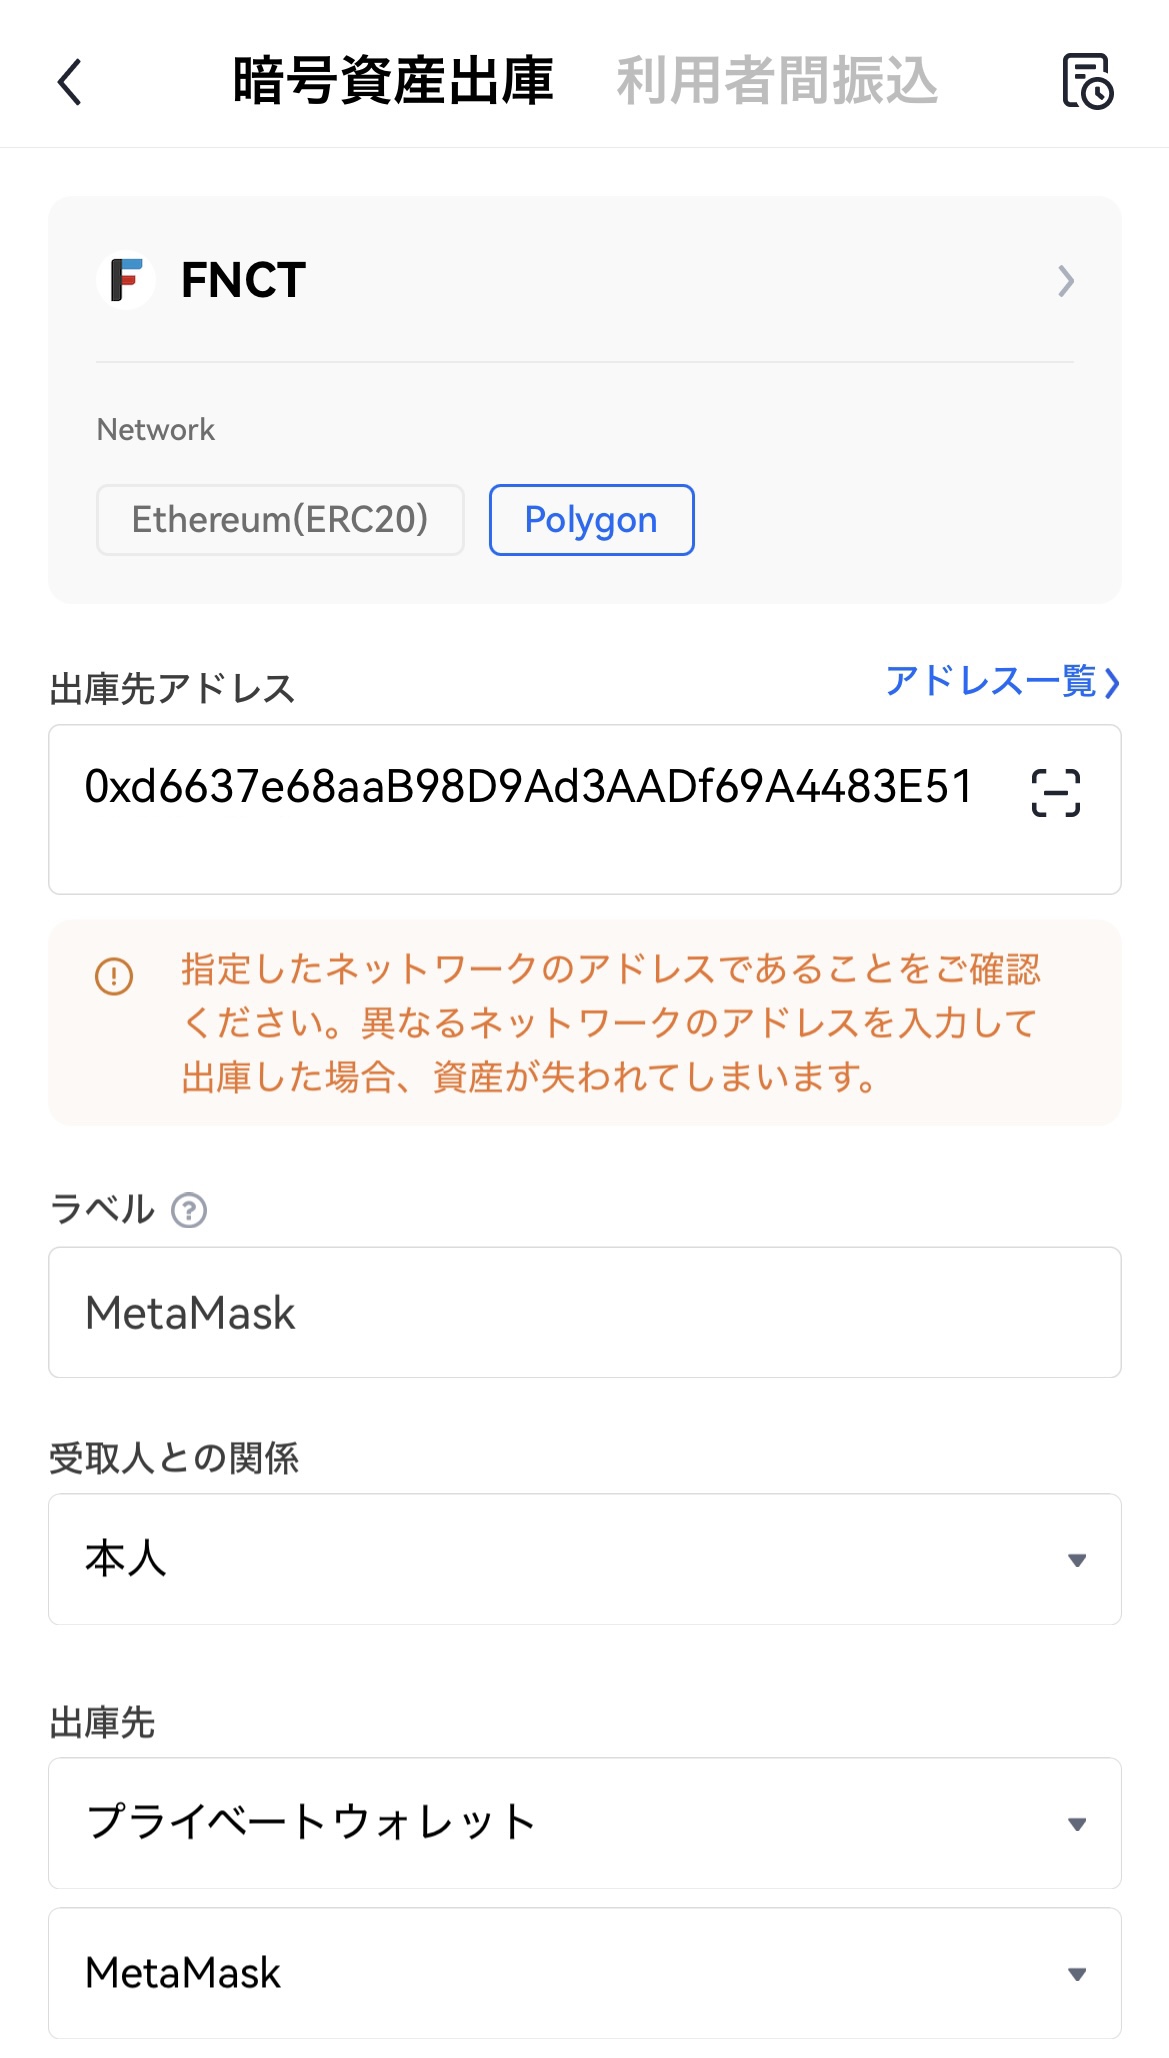 OKCoinからMetaMaskへFNCTを送金（Ethereumチェーン）